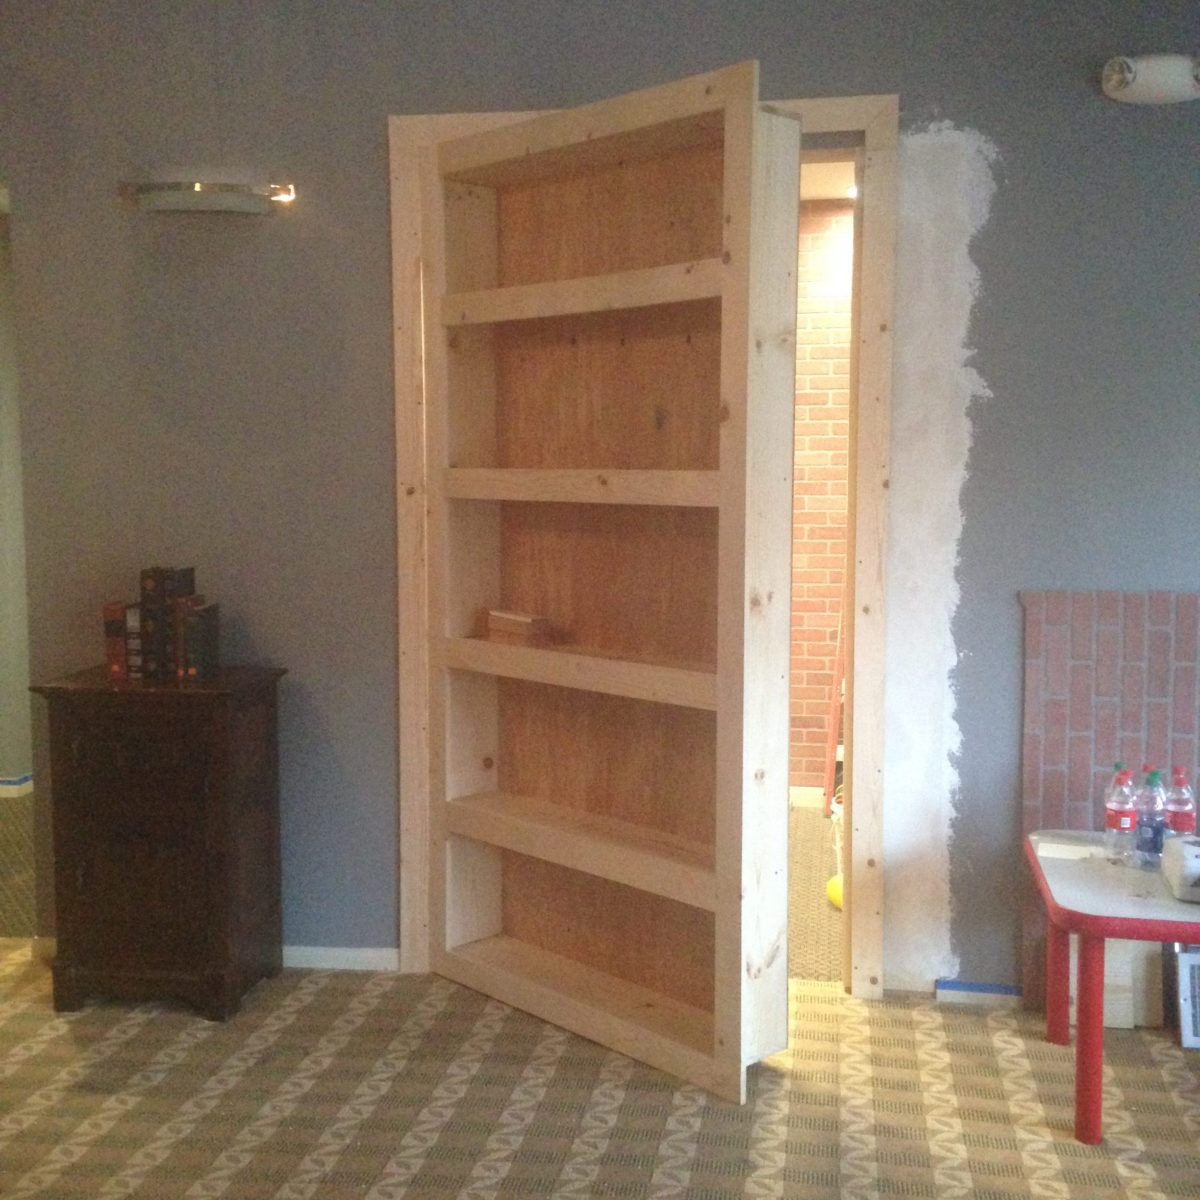 artist brandon roth builds a hidden room behind a bookcase